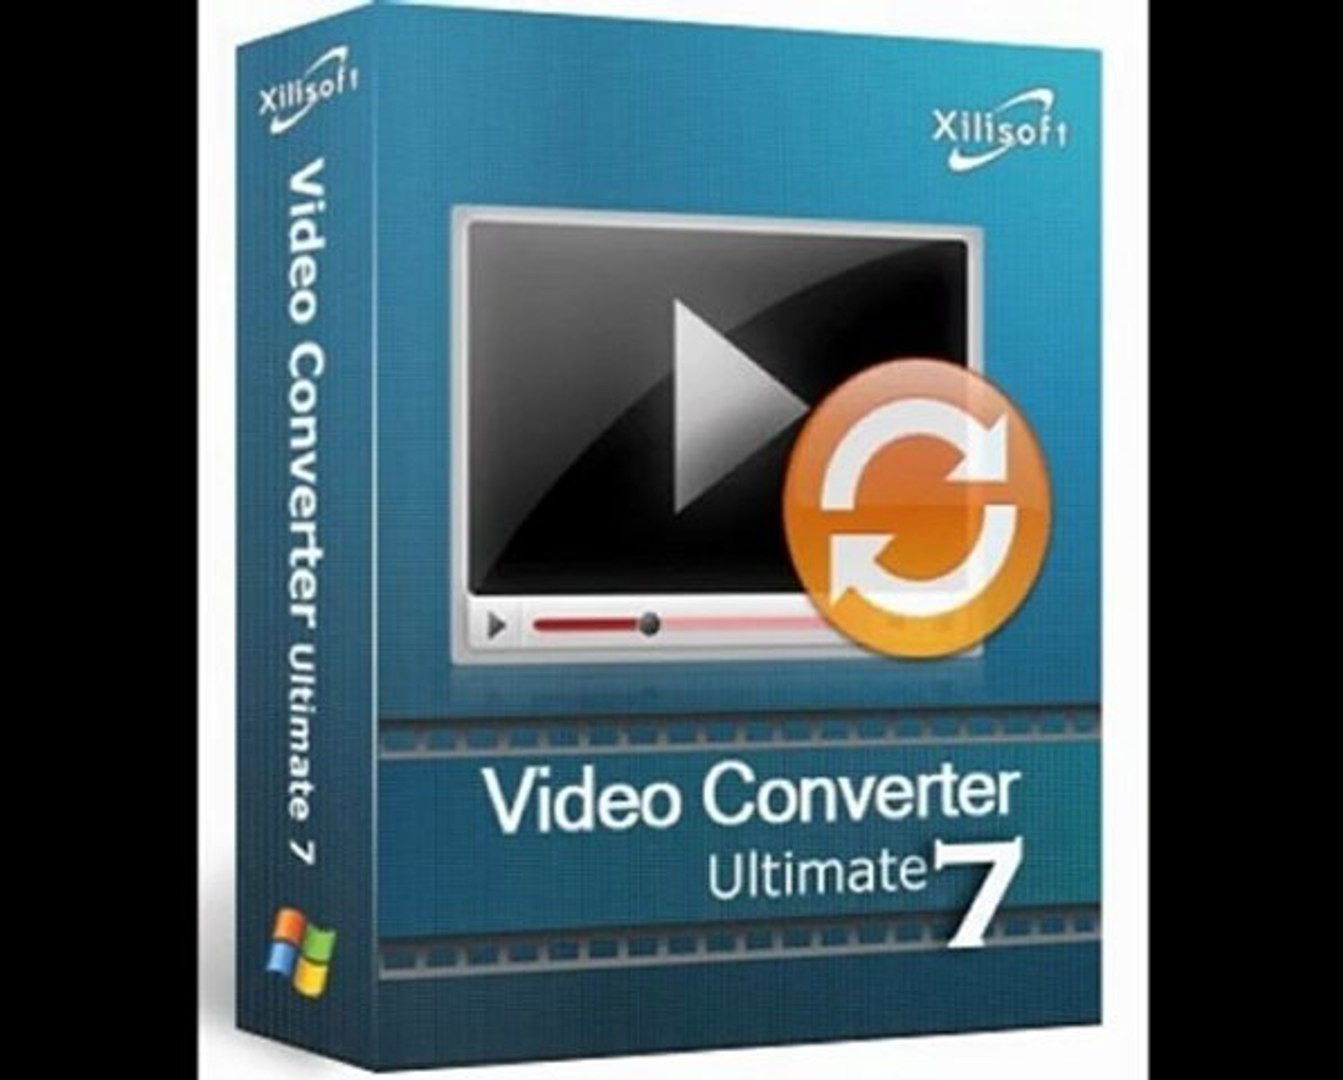 Xilisoft Video Converter Ultimate v7.2 license key - video Dailymotion